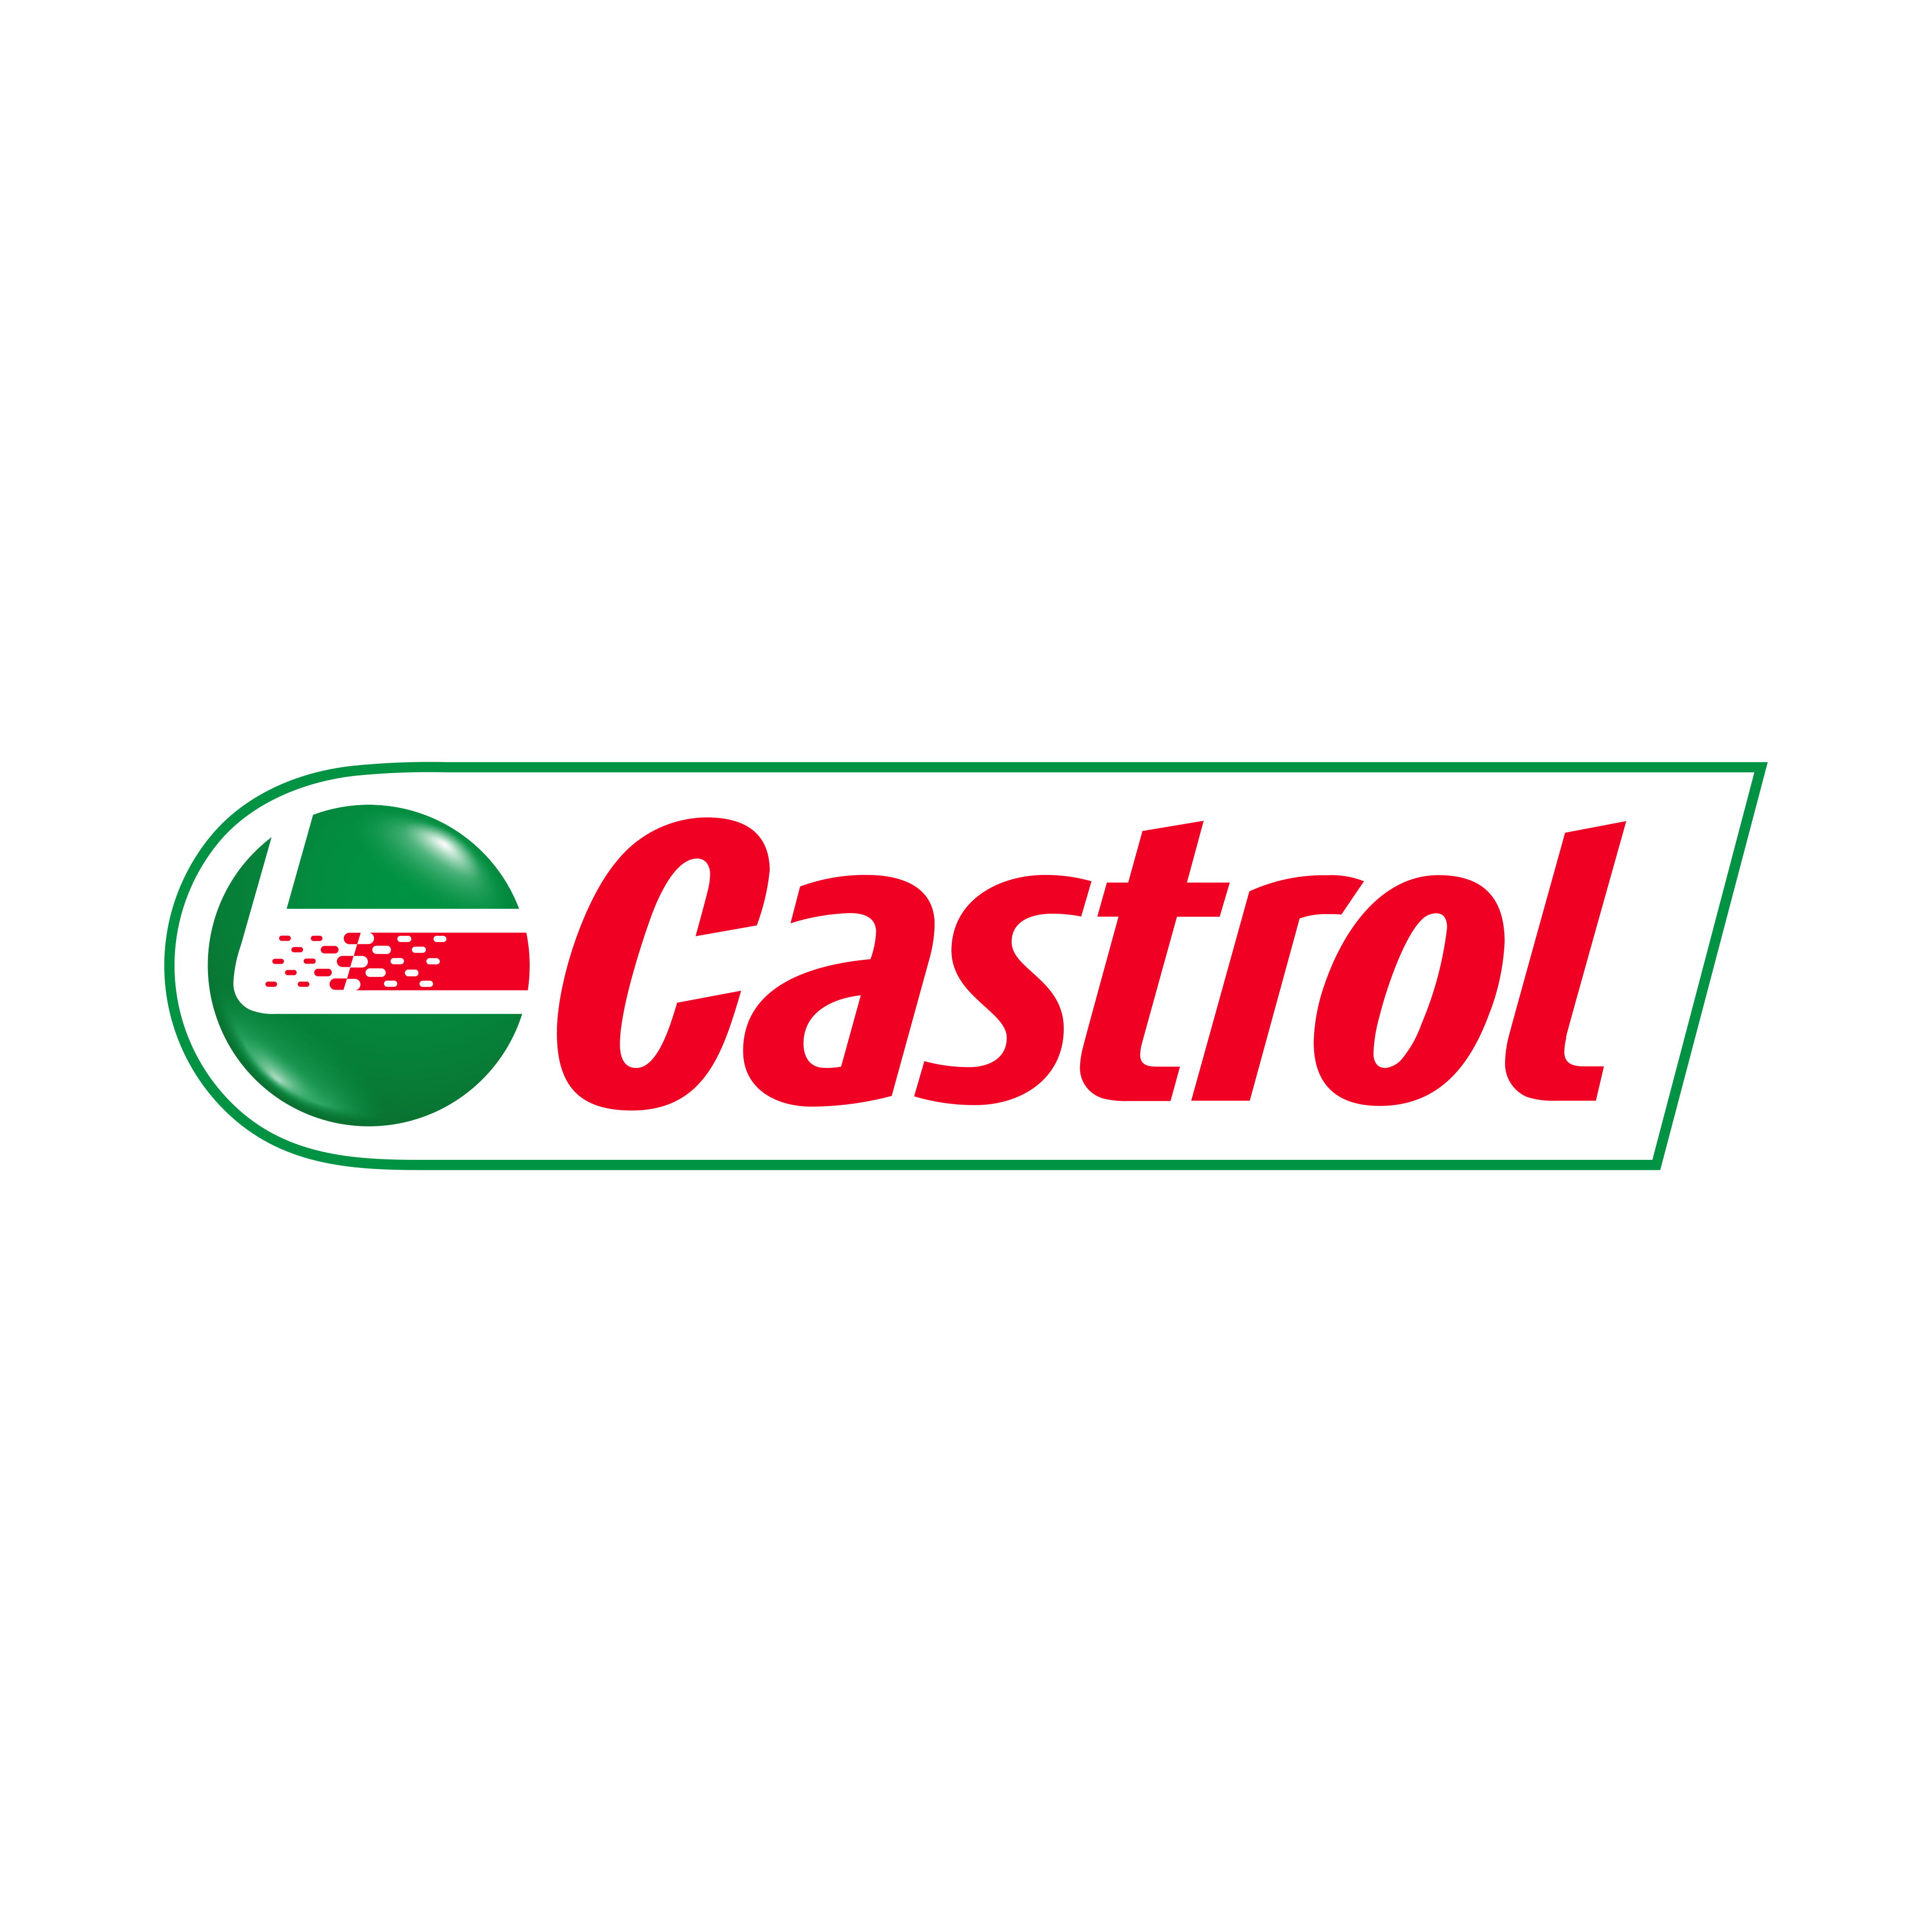 castrol logo 0 - Castrol Logo